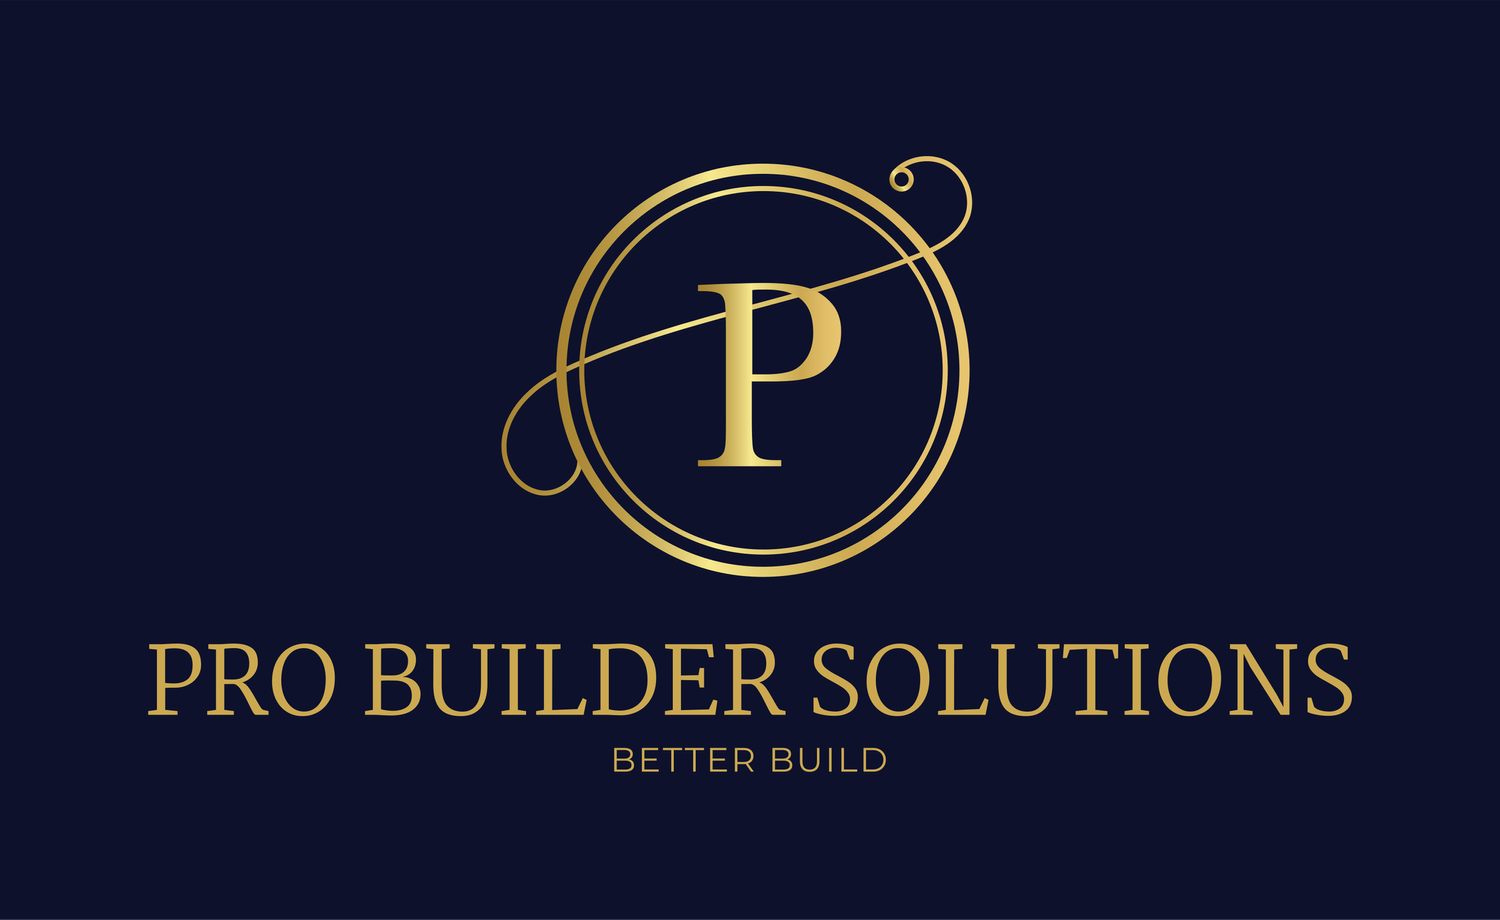 PRO BUILDER SOLUTIONS